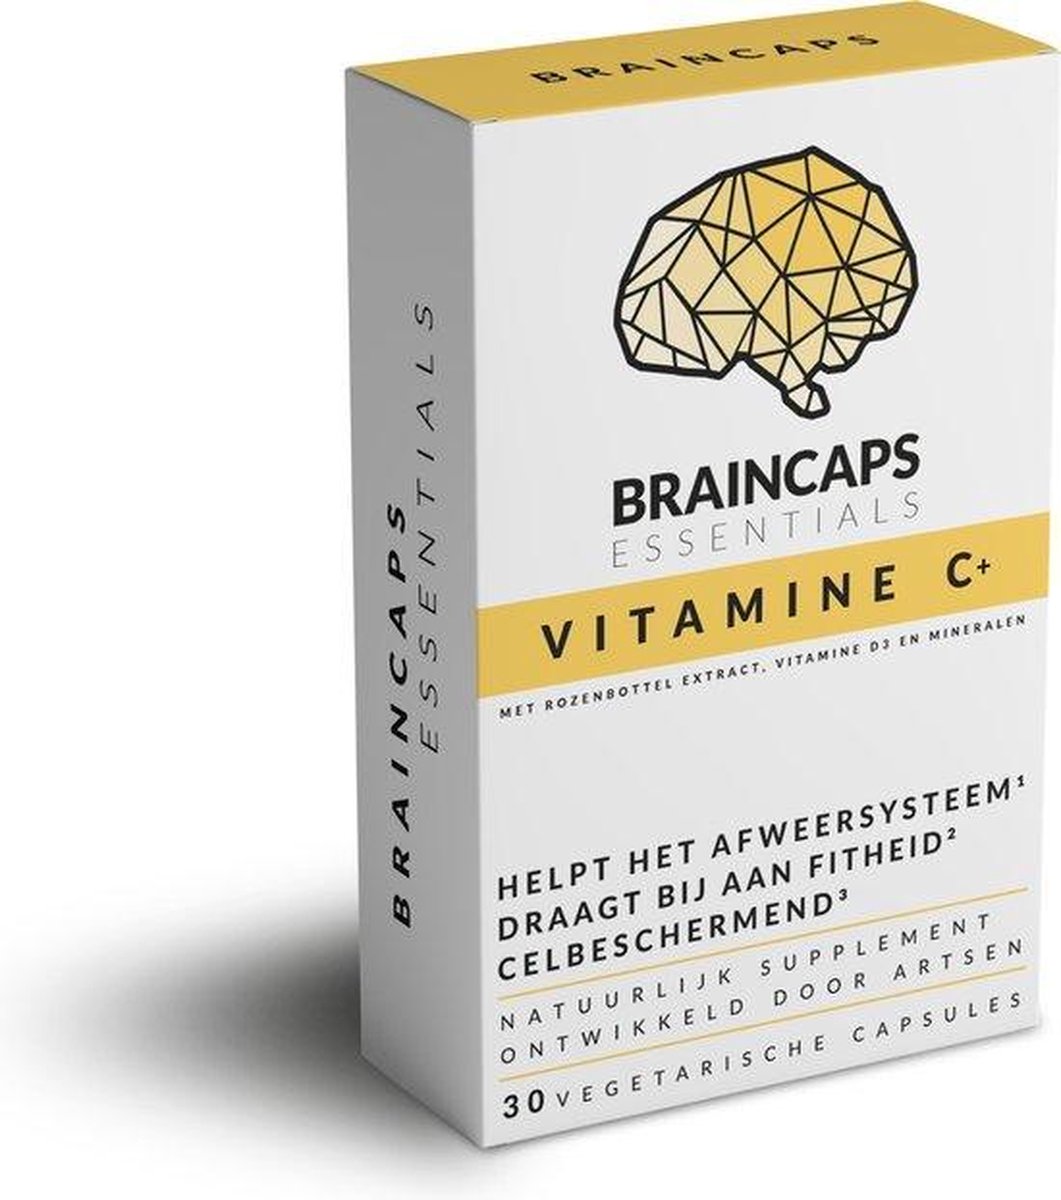 Braincaps Vitamine C plus – All-in-1 essentiële vitamines – voordeelverpakking